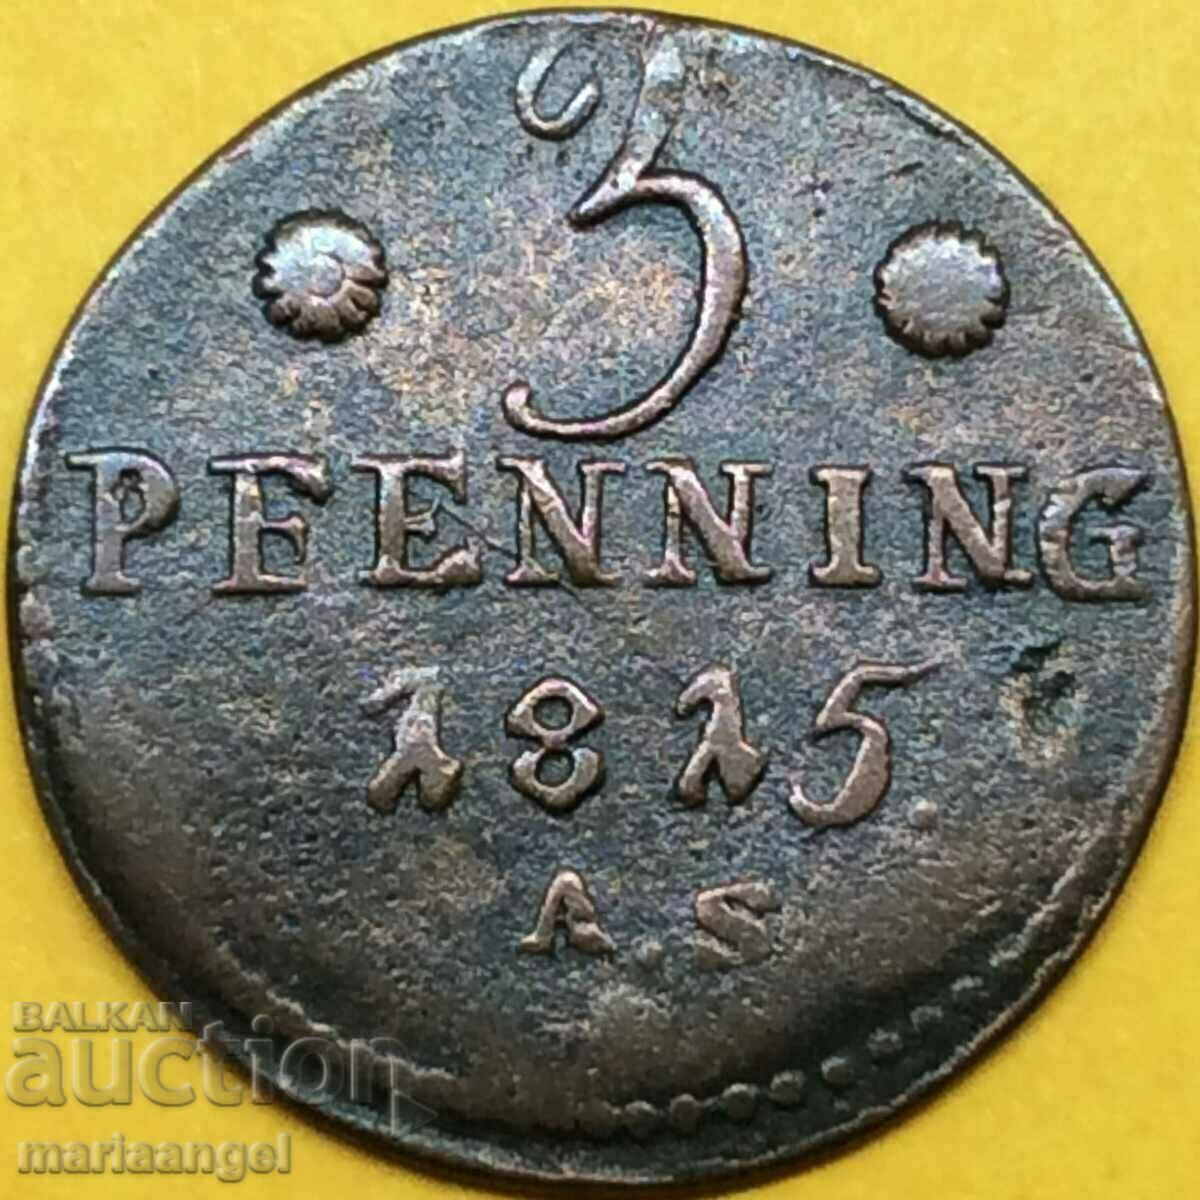 Rostock 3 Pfennig 1815 Mecklenburg Germany - rare!